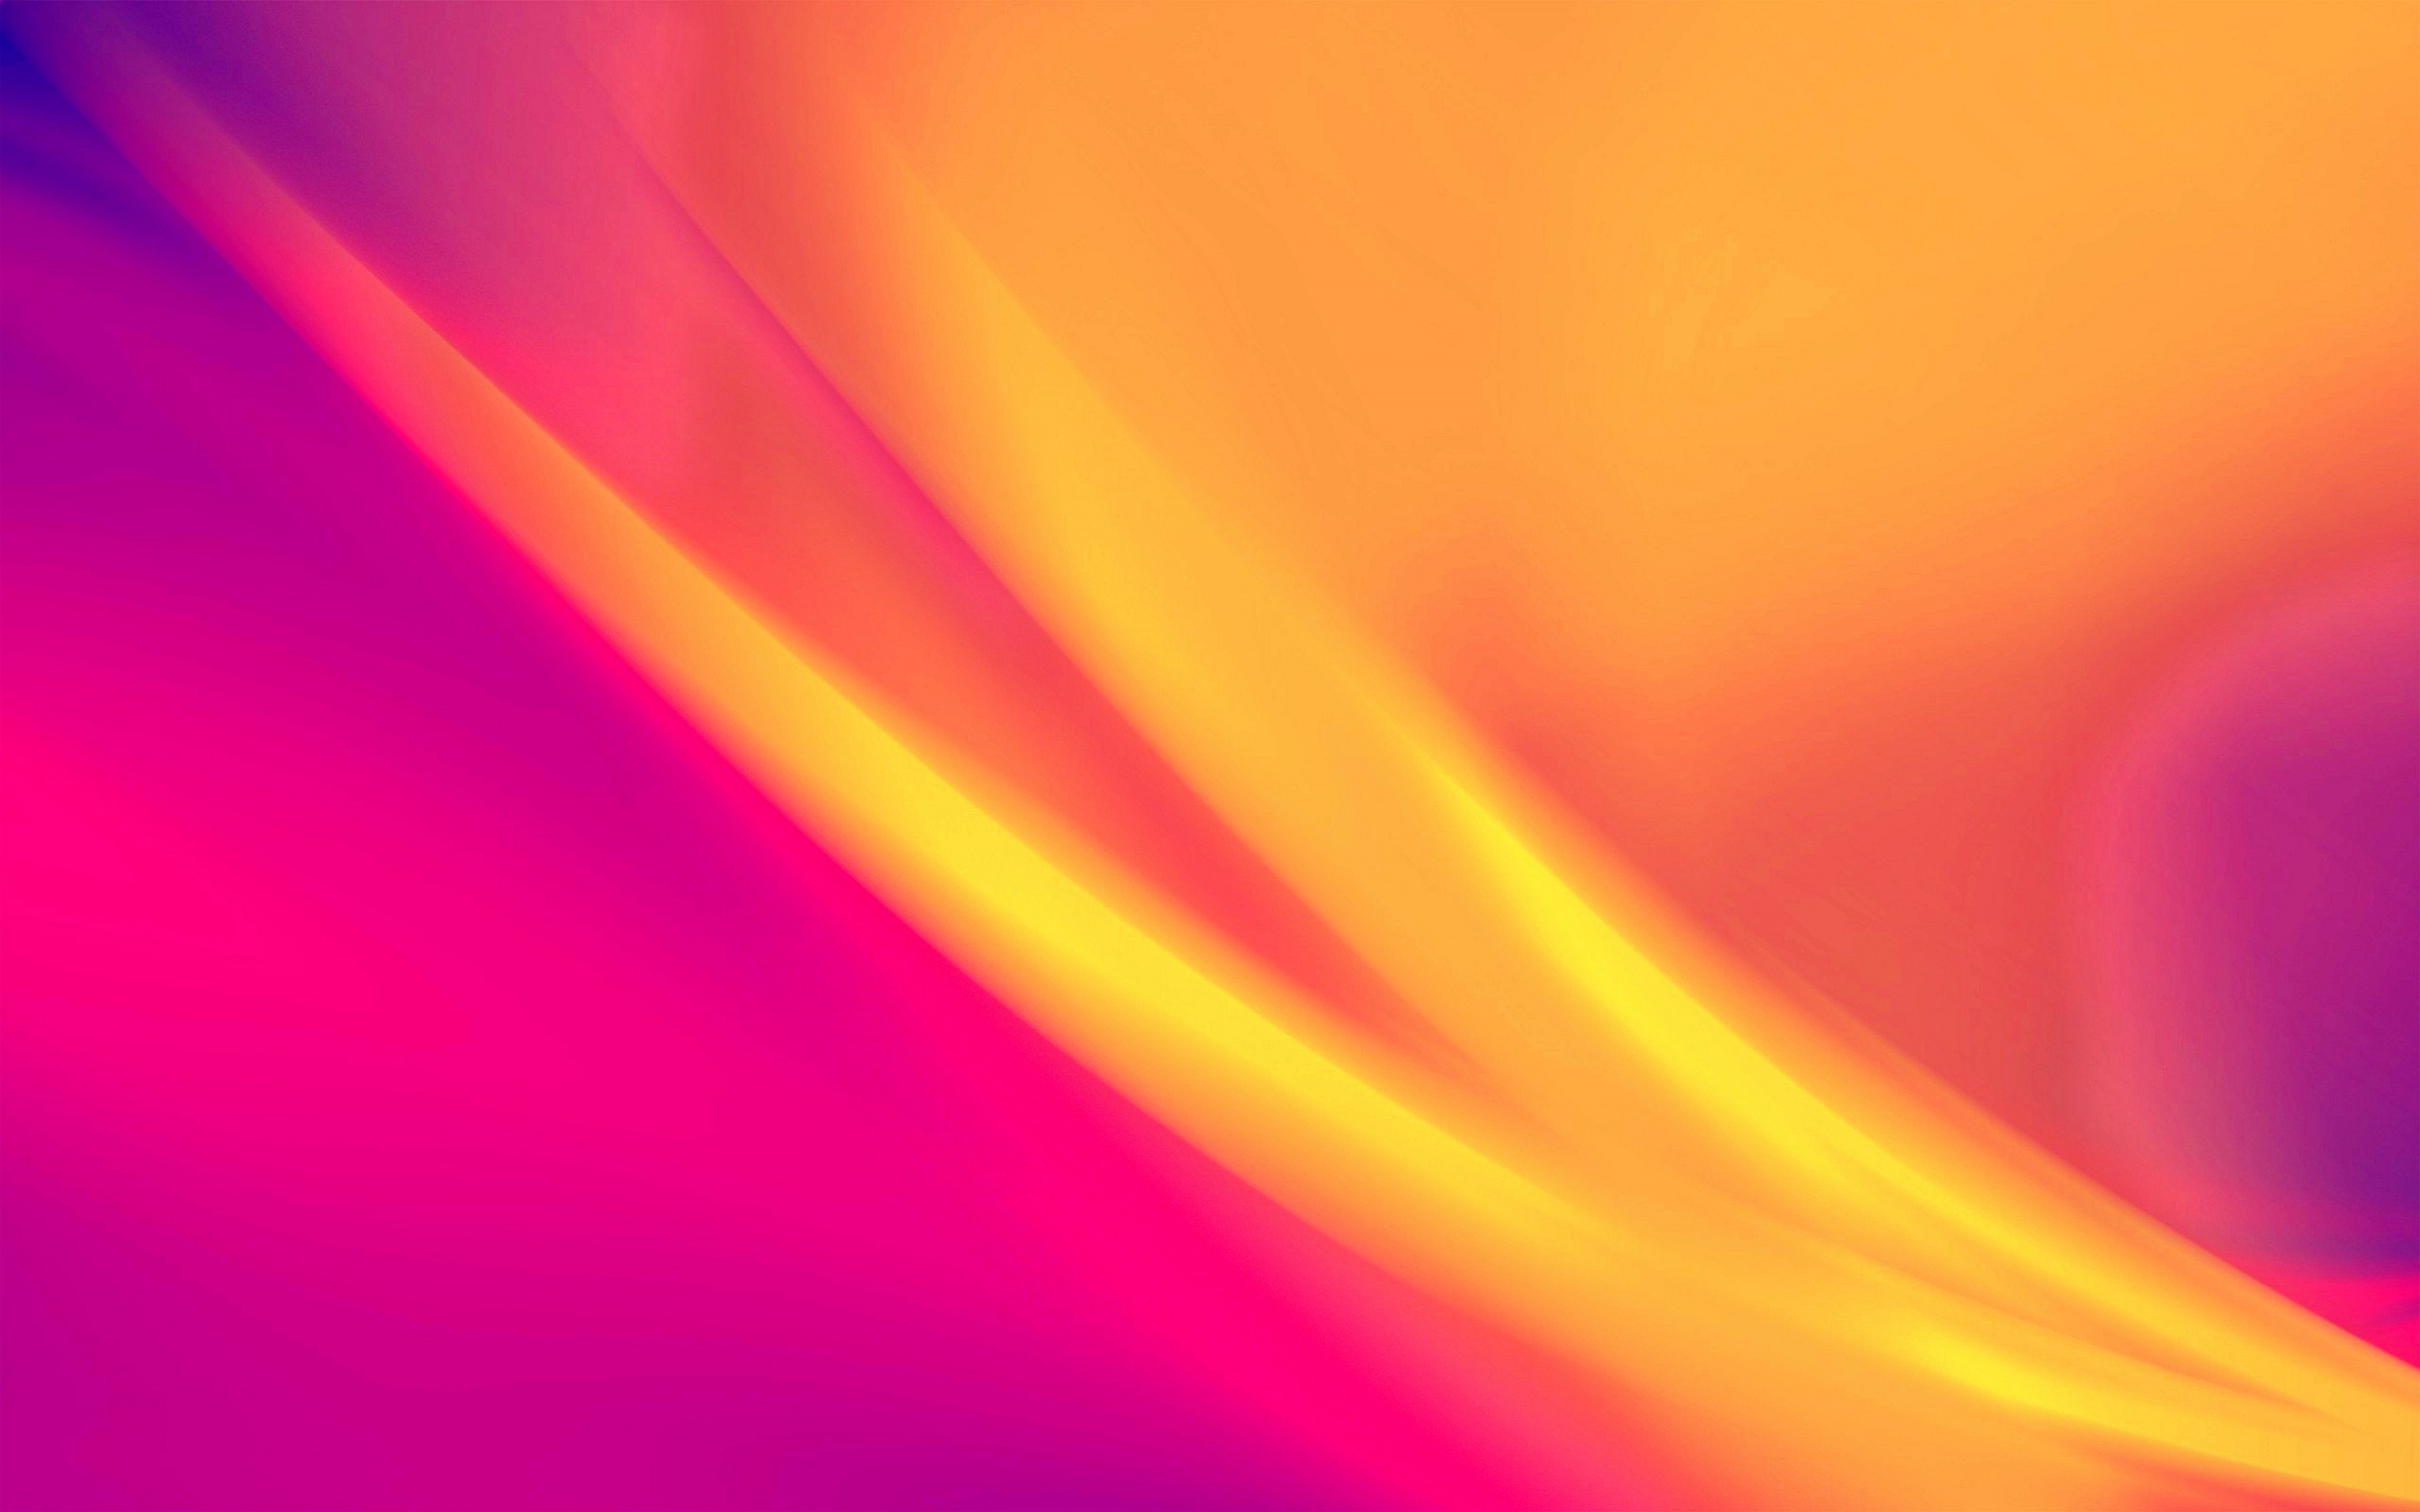 72+] Bright Color Backgrounds - WallpaperSafari